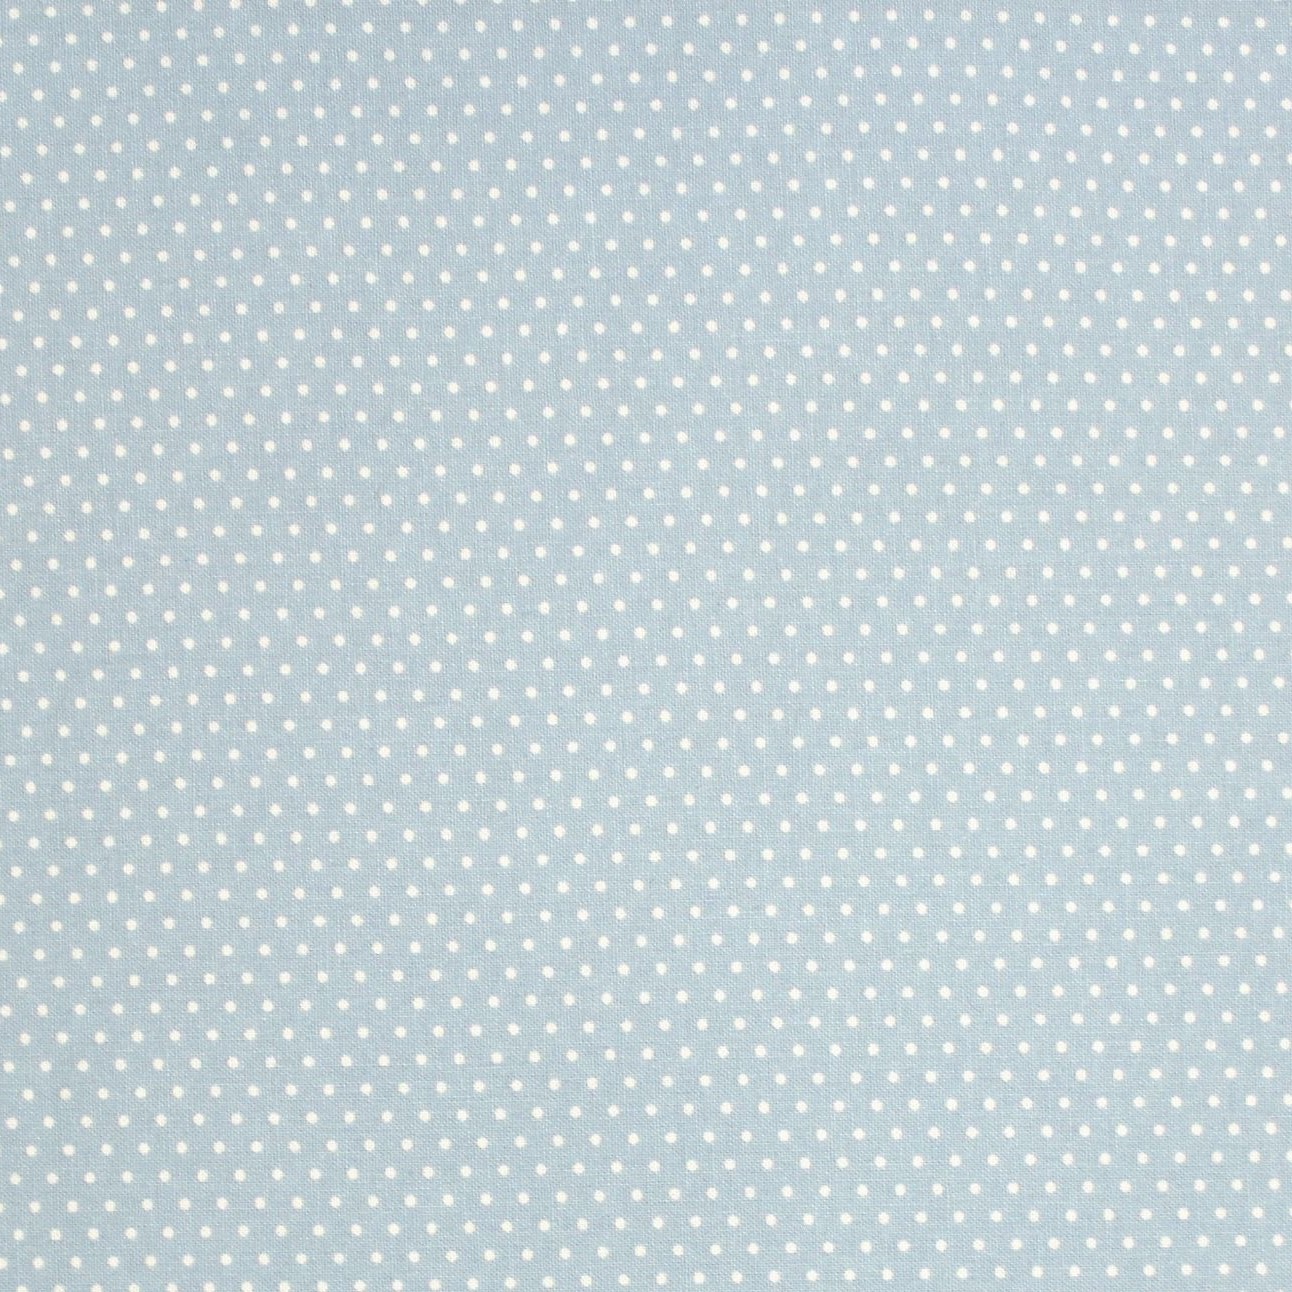 Dots Cotton Fabric - White & Blue